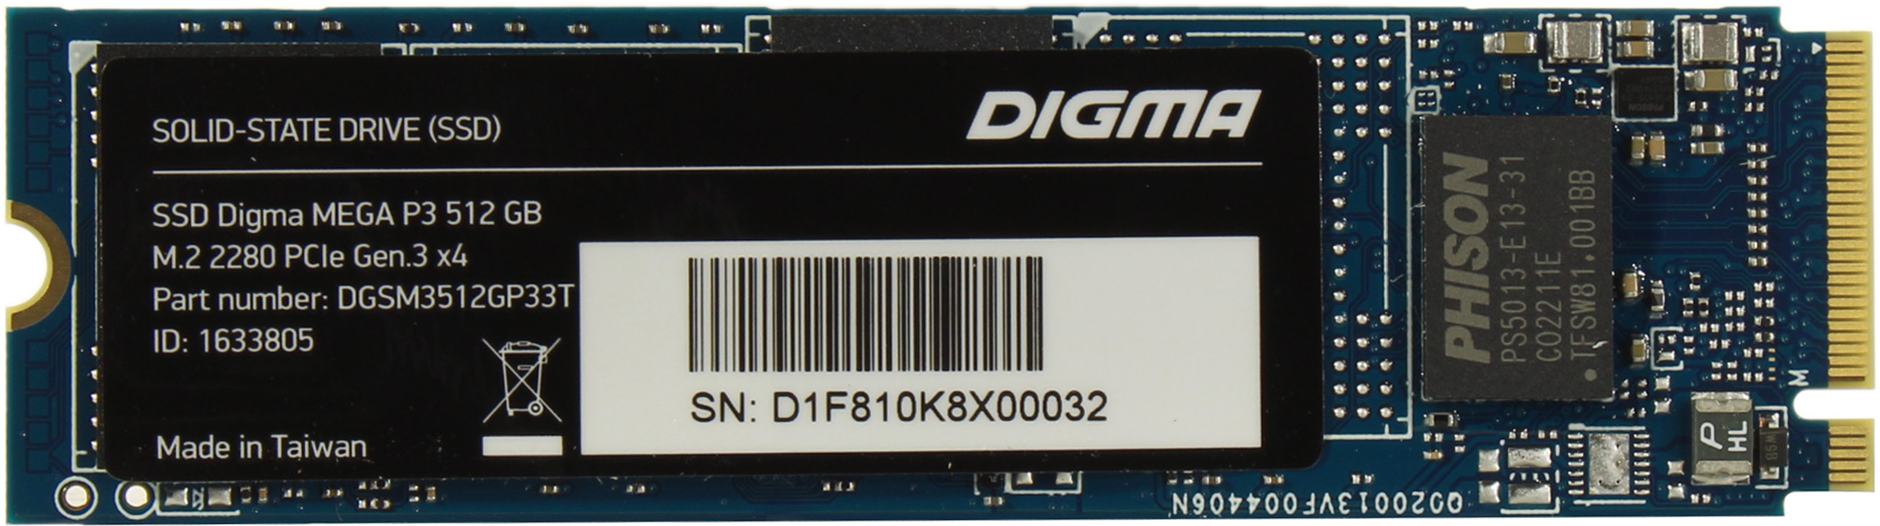 Накопитель SSD M.2 512 GB Digma MEGA P3 (DGSM3512GP33T) Retail (PCI-Express 4x rev.3.0 (NVMe 1.3), 3D NAND (TLC), M.2 Type 2280 (80x22x2mm))